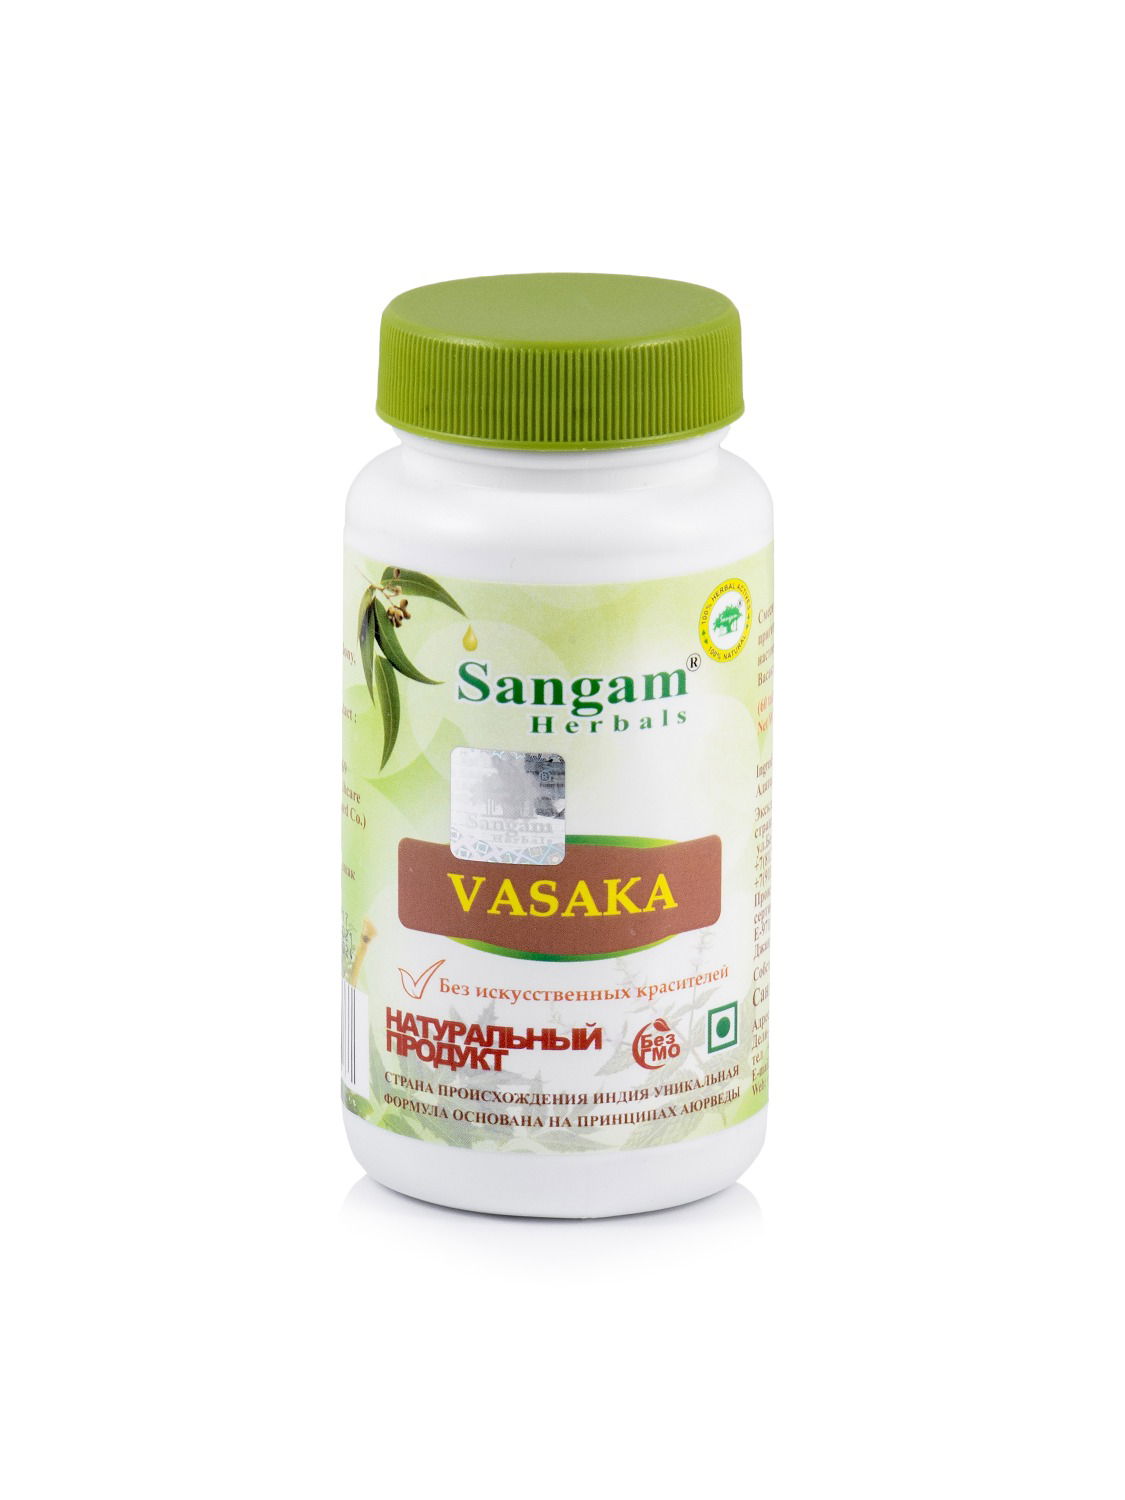 Васака Sangam Herbals (60 таблеток). 